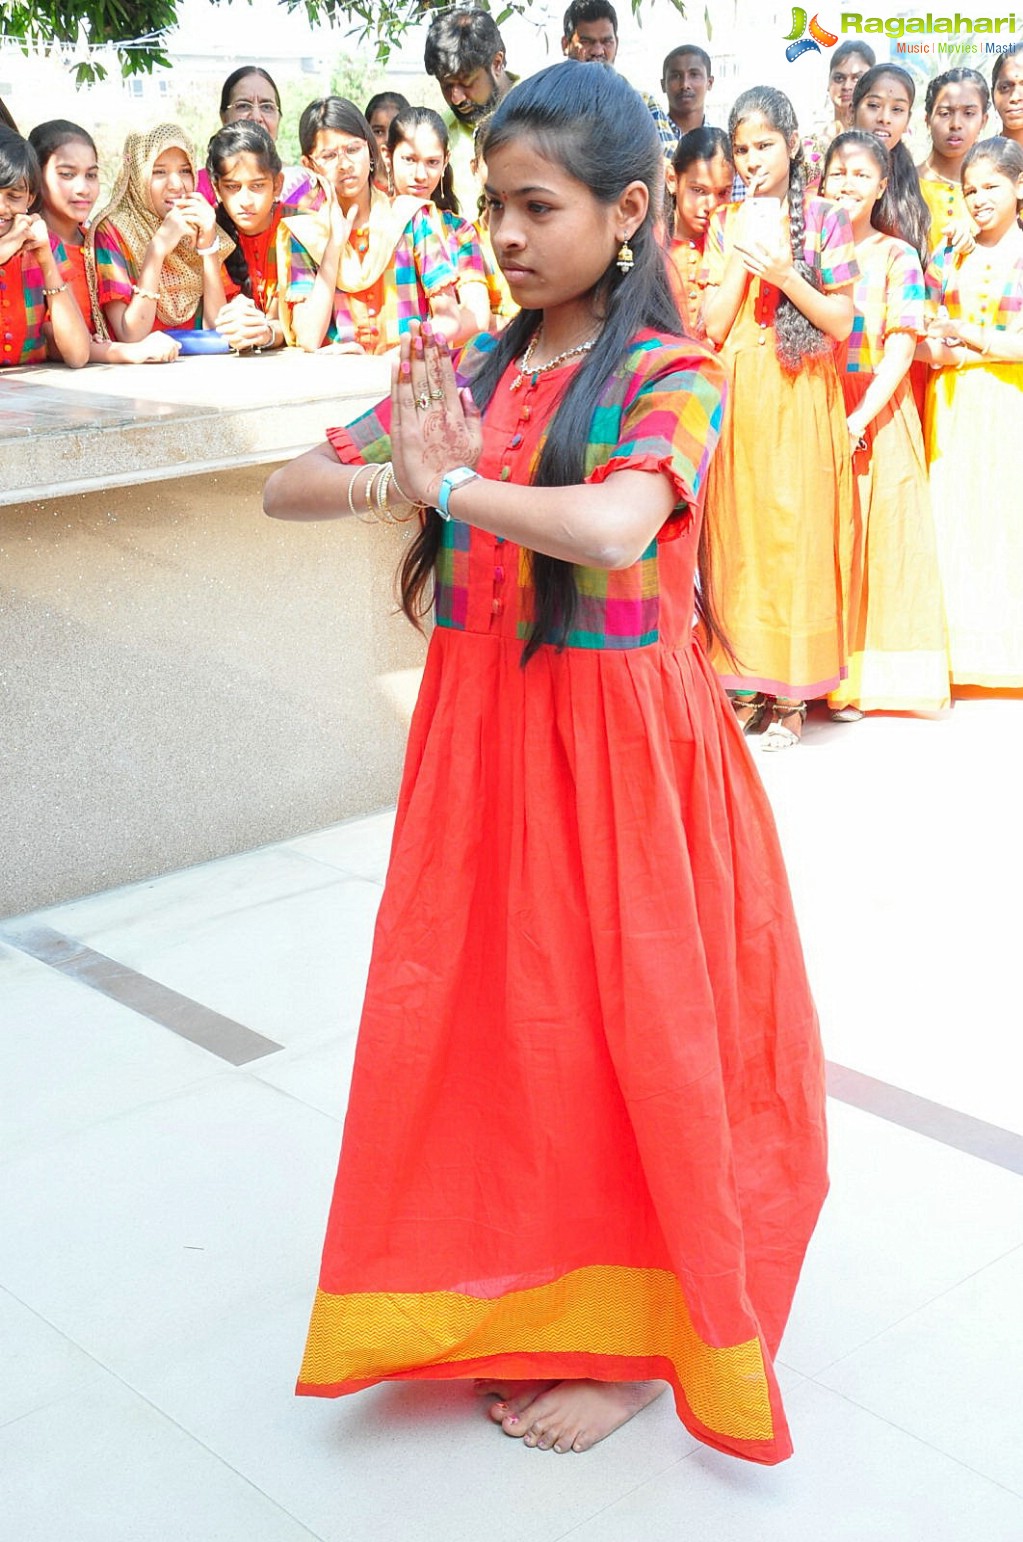 Lakshmi Manchu Celebrates Sankranthi with Kids From Govt. Schools